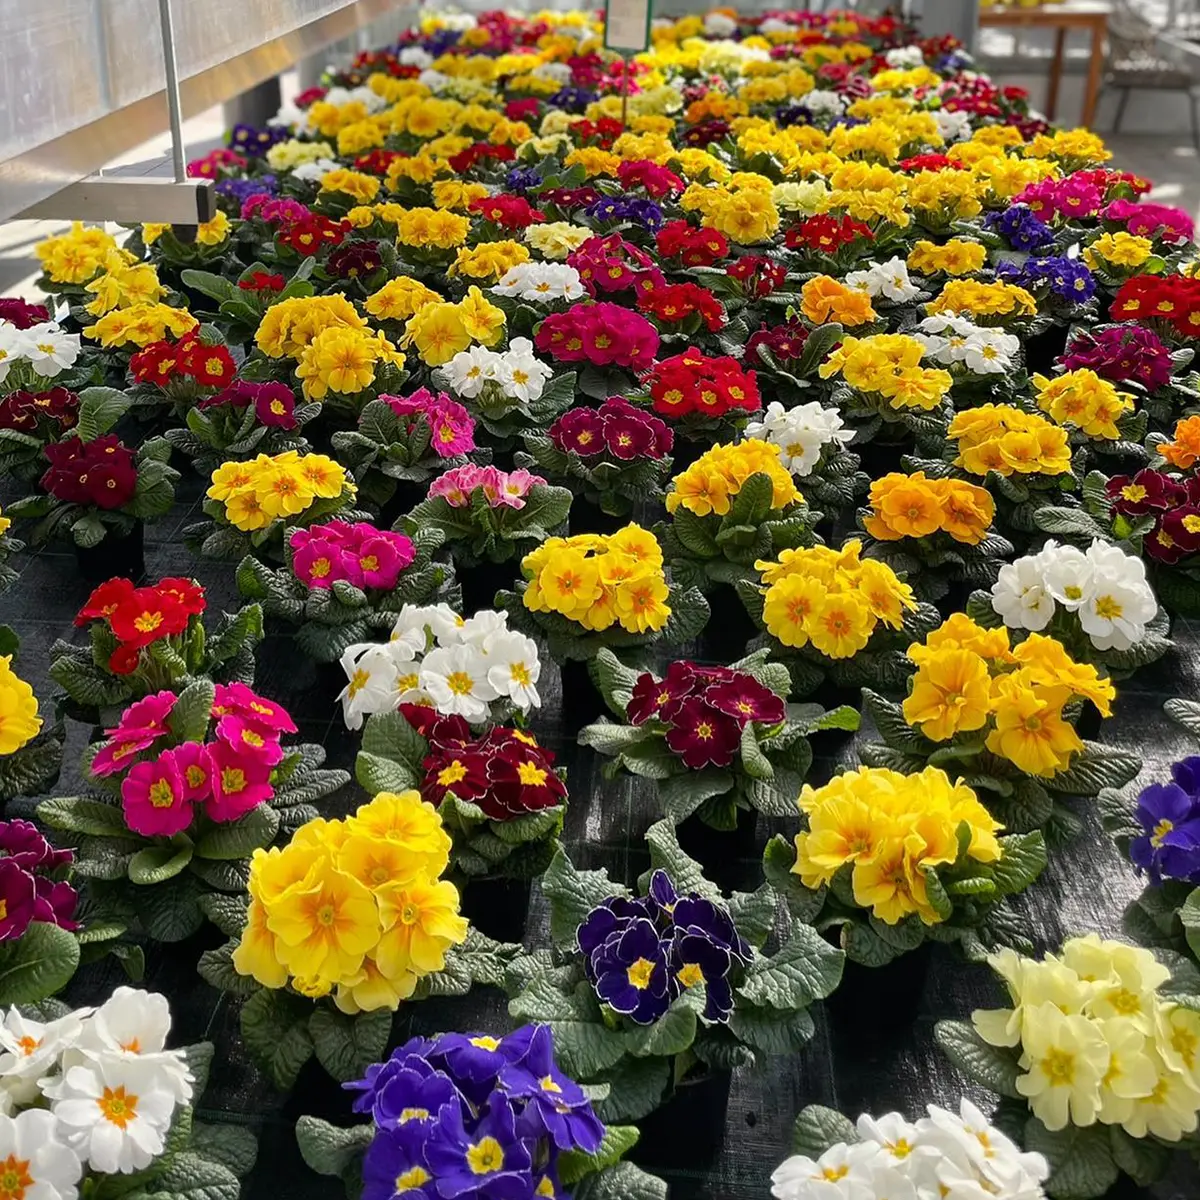 Rothers Blumen Paradies florist on Thursd feature